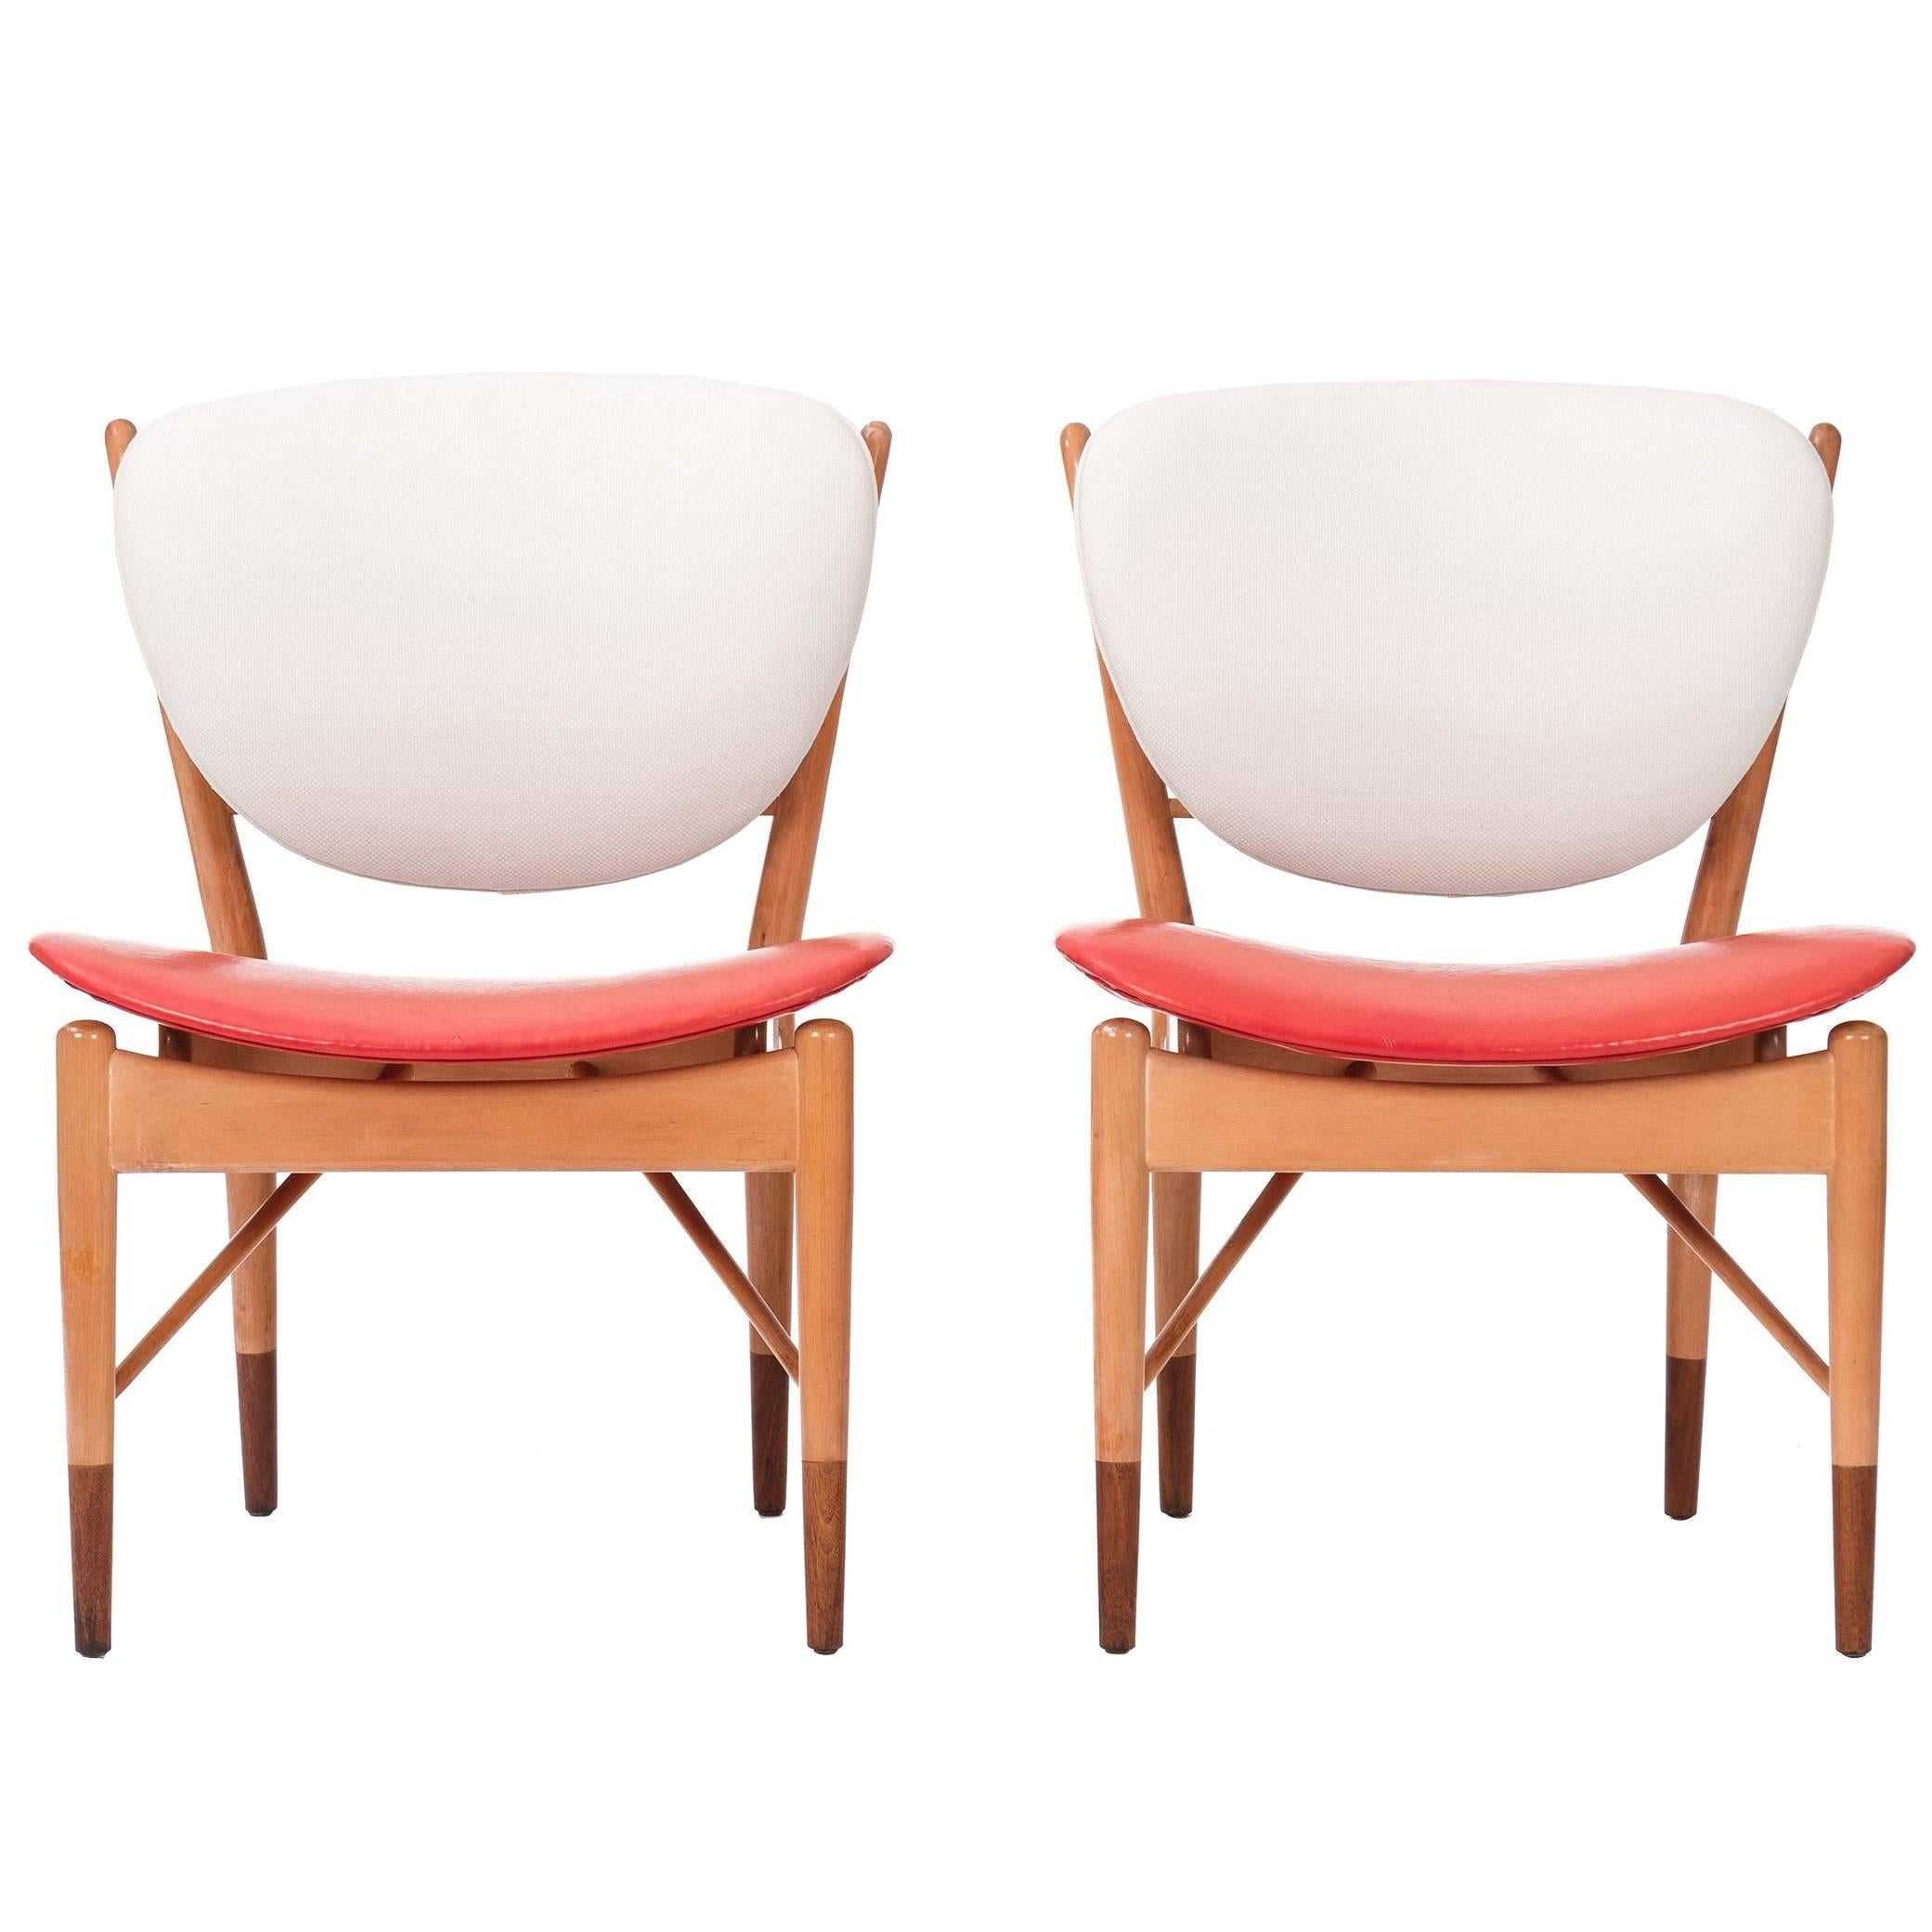 Pair of Finn Juhl Chairs